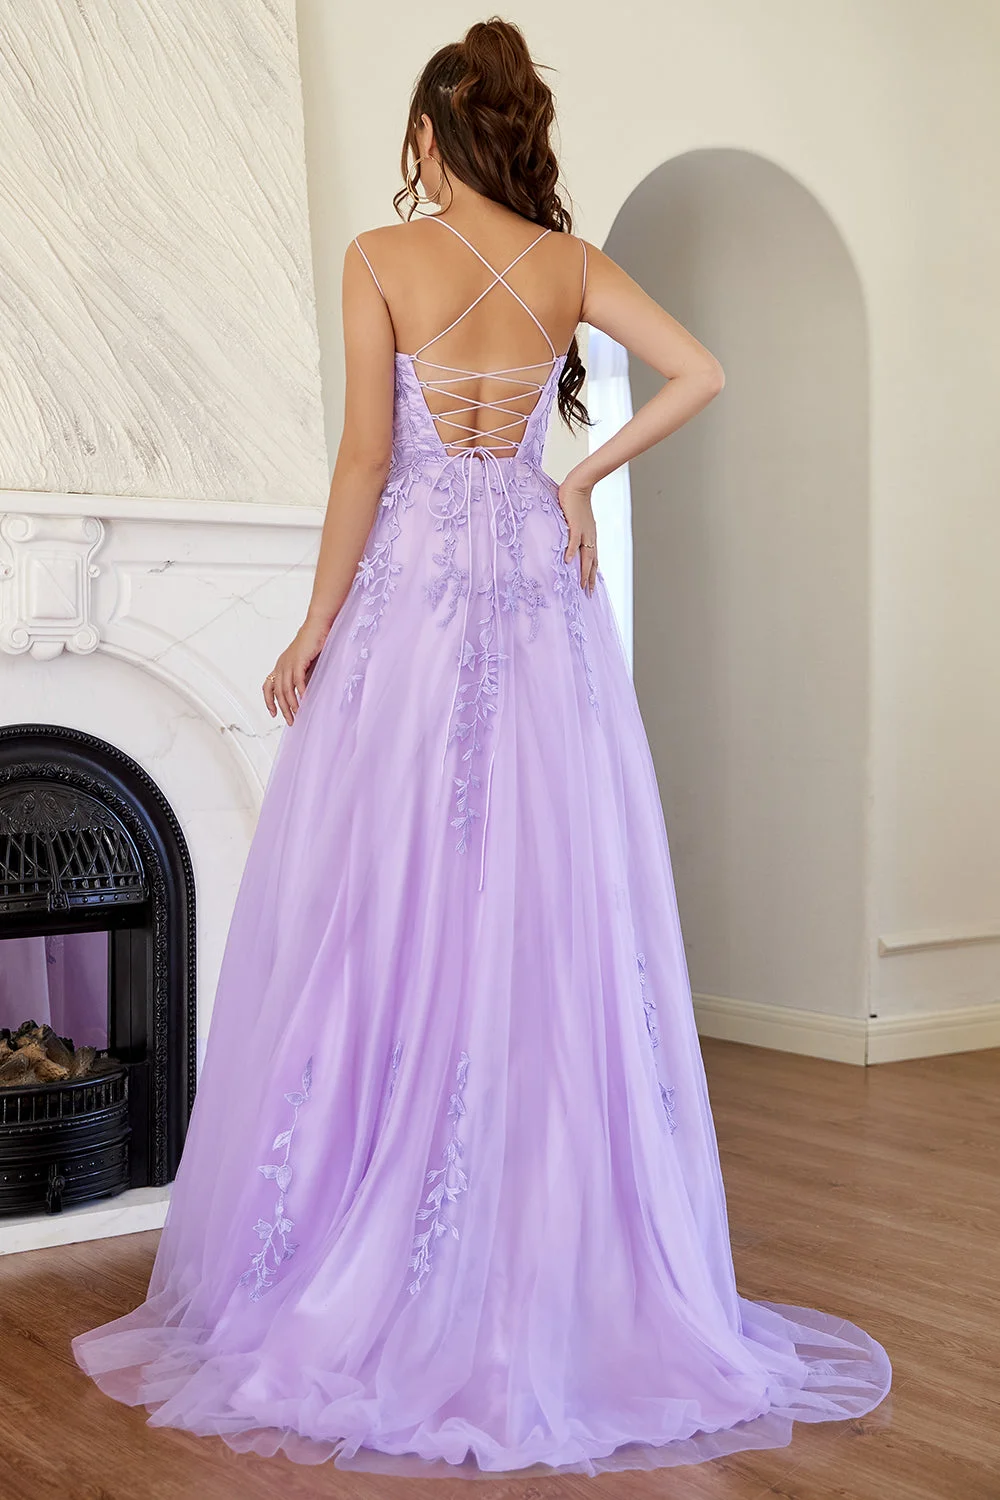 women’s lavender dress